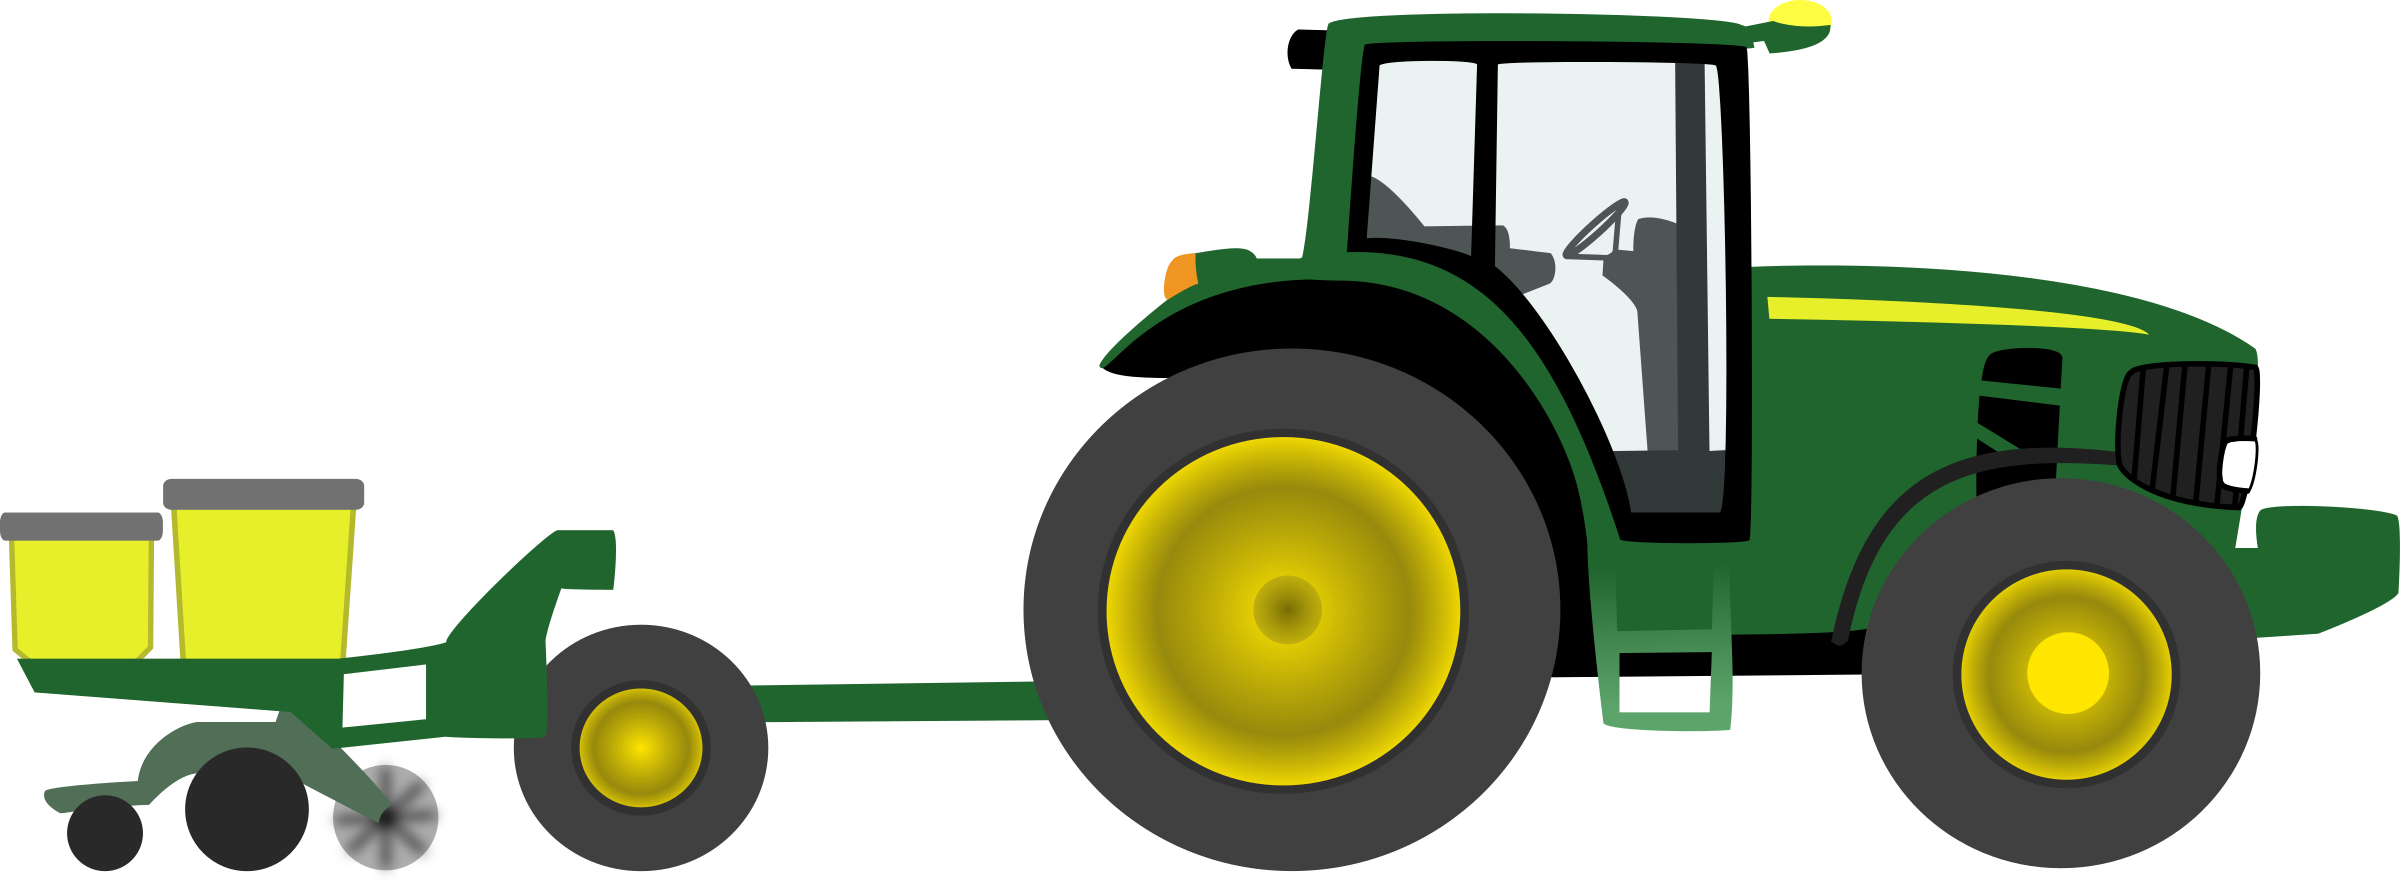 Download PNG image - Tractor PNG Transparent Image 